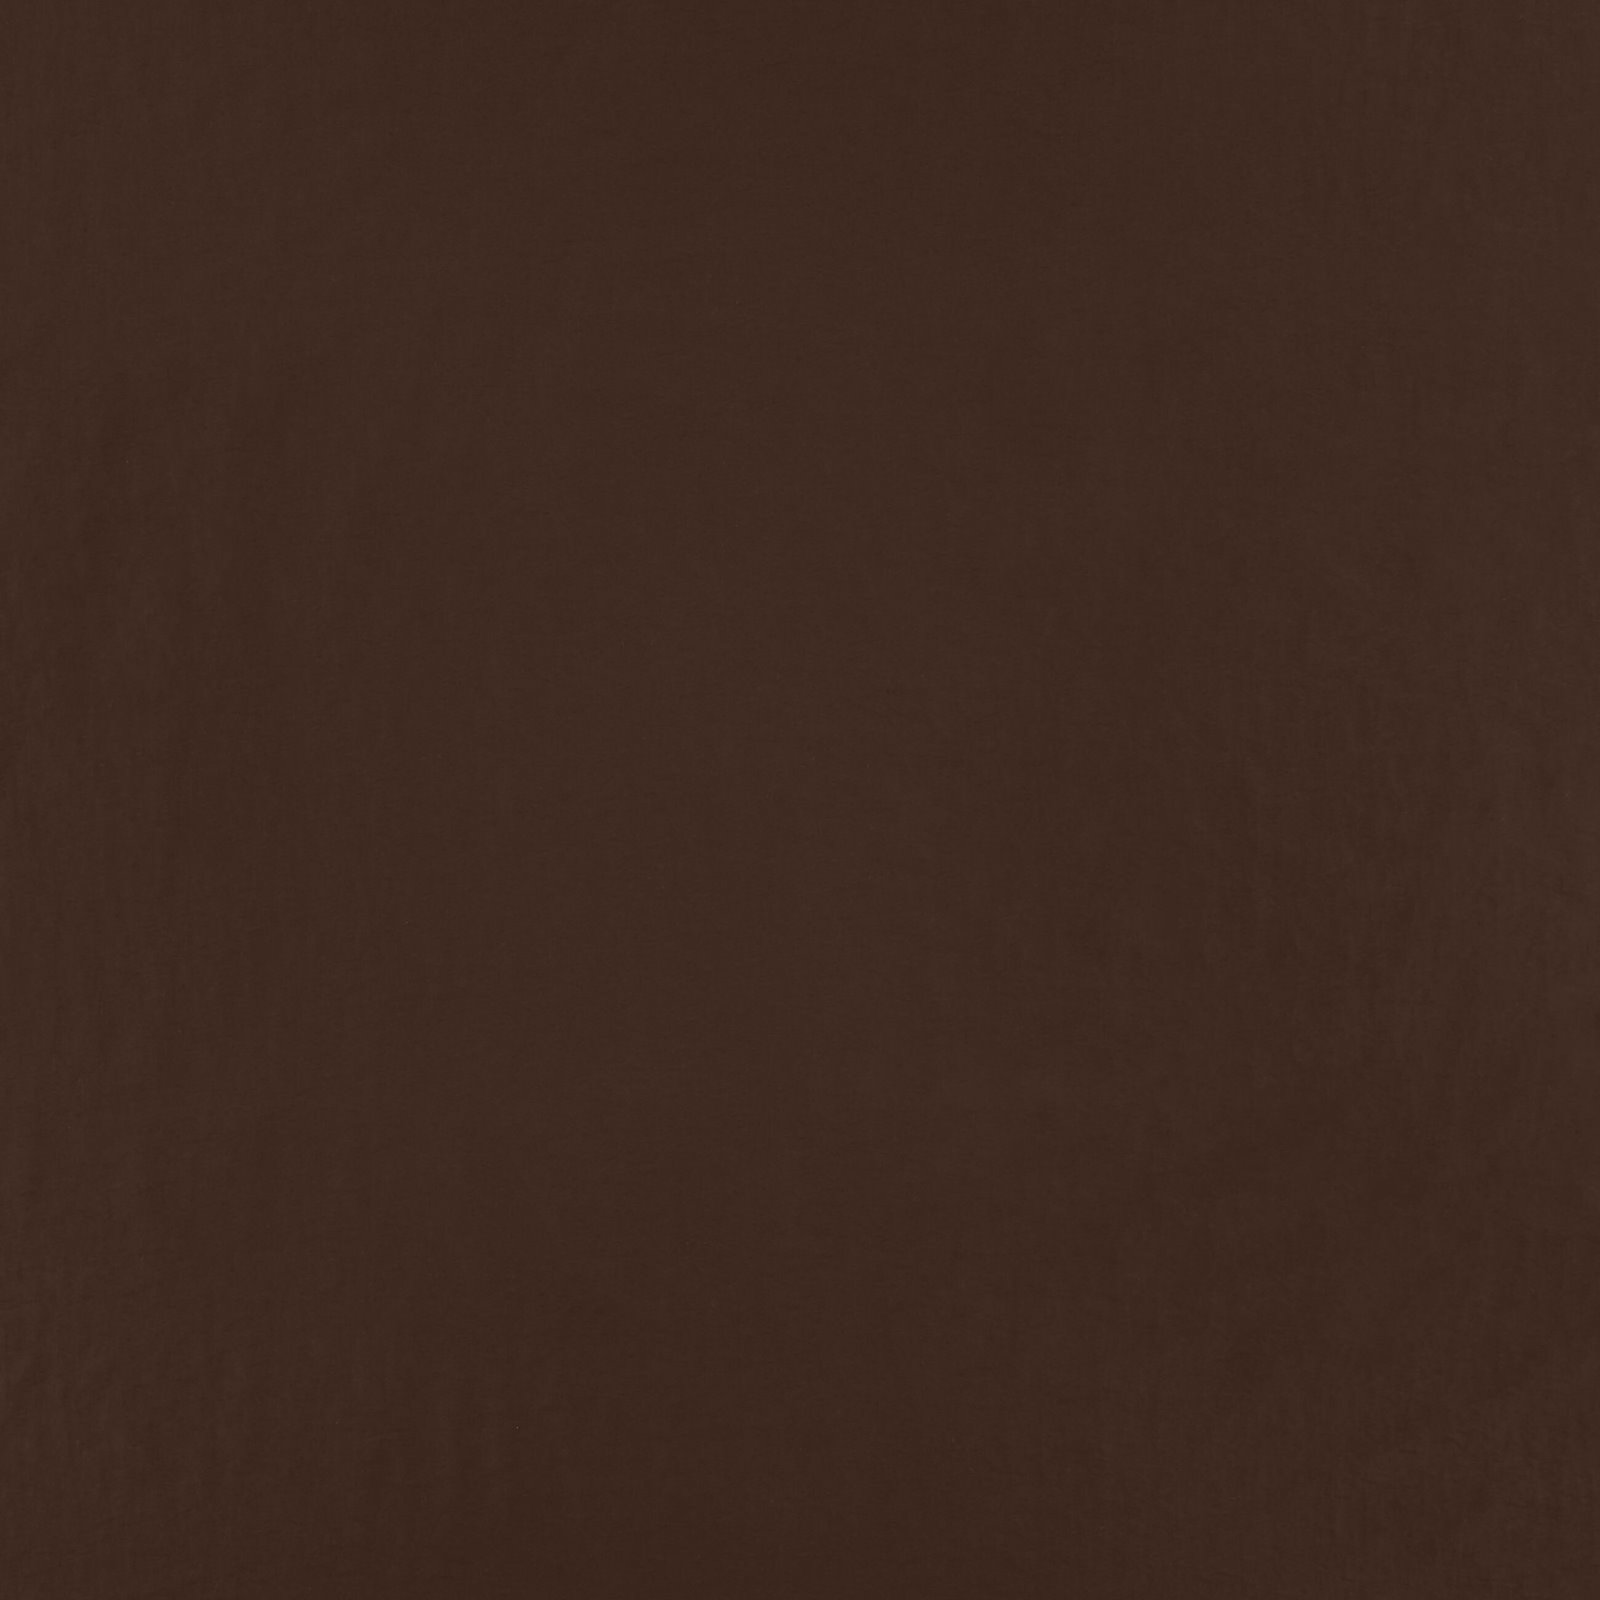 Woven taslan with structur dark brown 560278_pack_solid